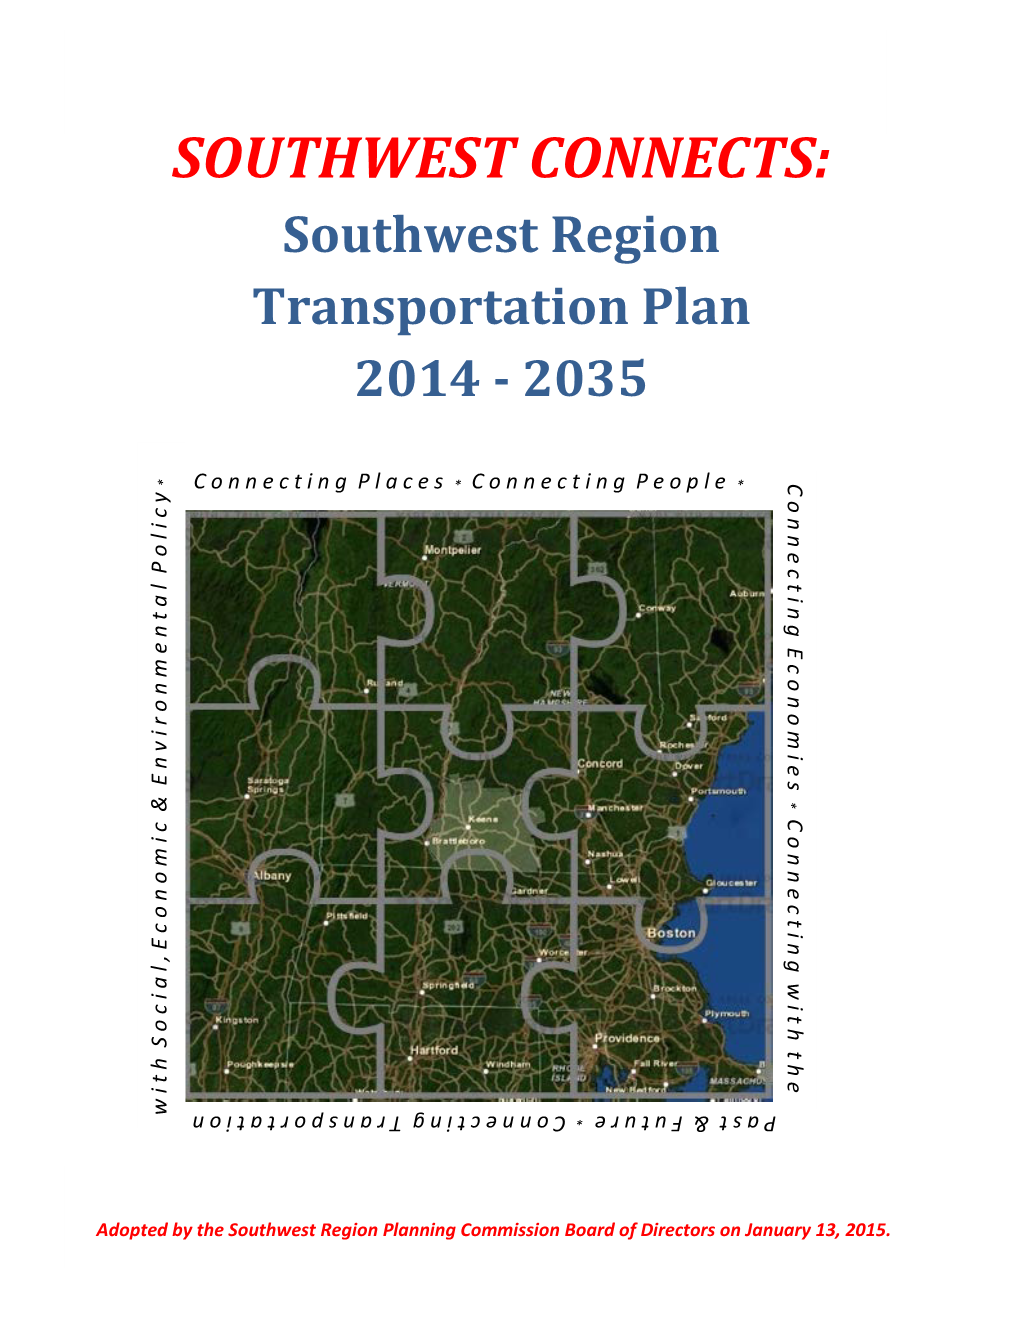 SOUTHWEST CONNECTS: Southwest Region Transportation Plan 2014 - 2035